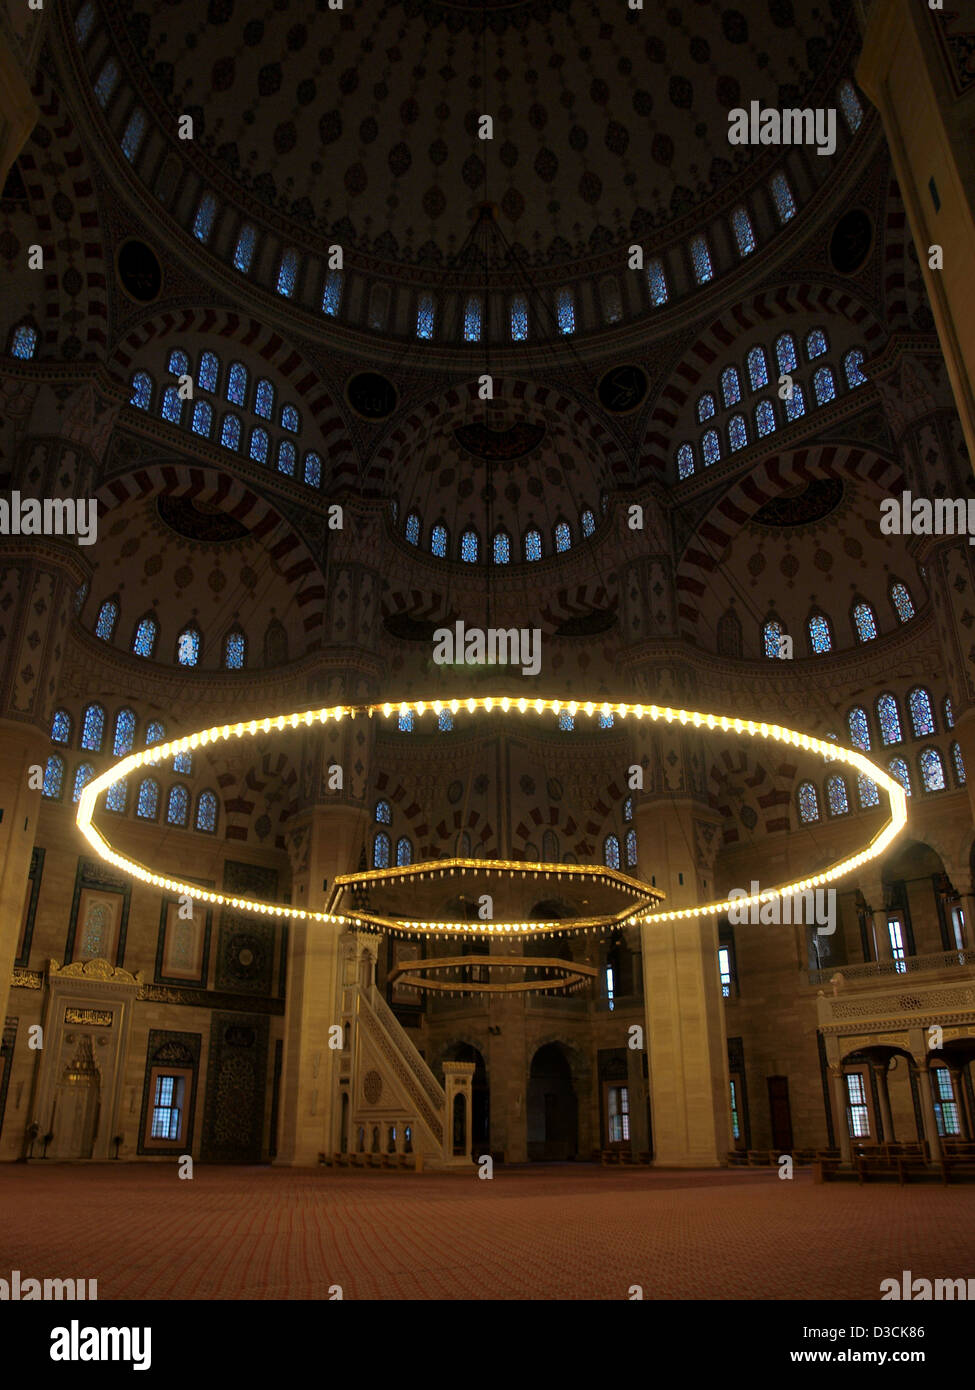 Interior of Sabancı Merkez Camii (English: Sabancı Central Mosque) in Adana, the largest mosque in Turkey. Stock Photo